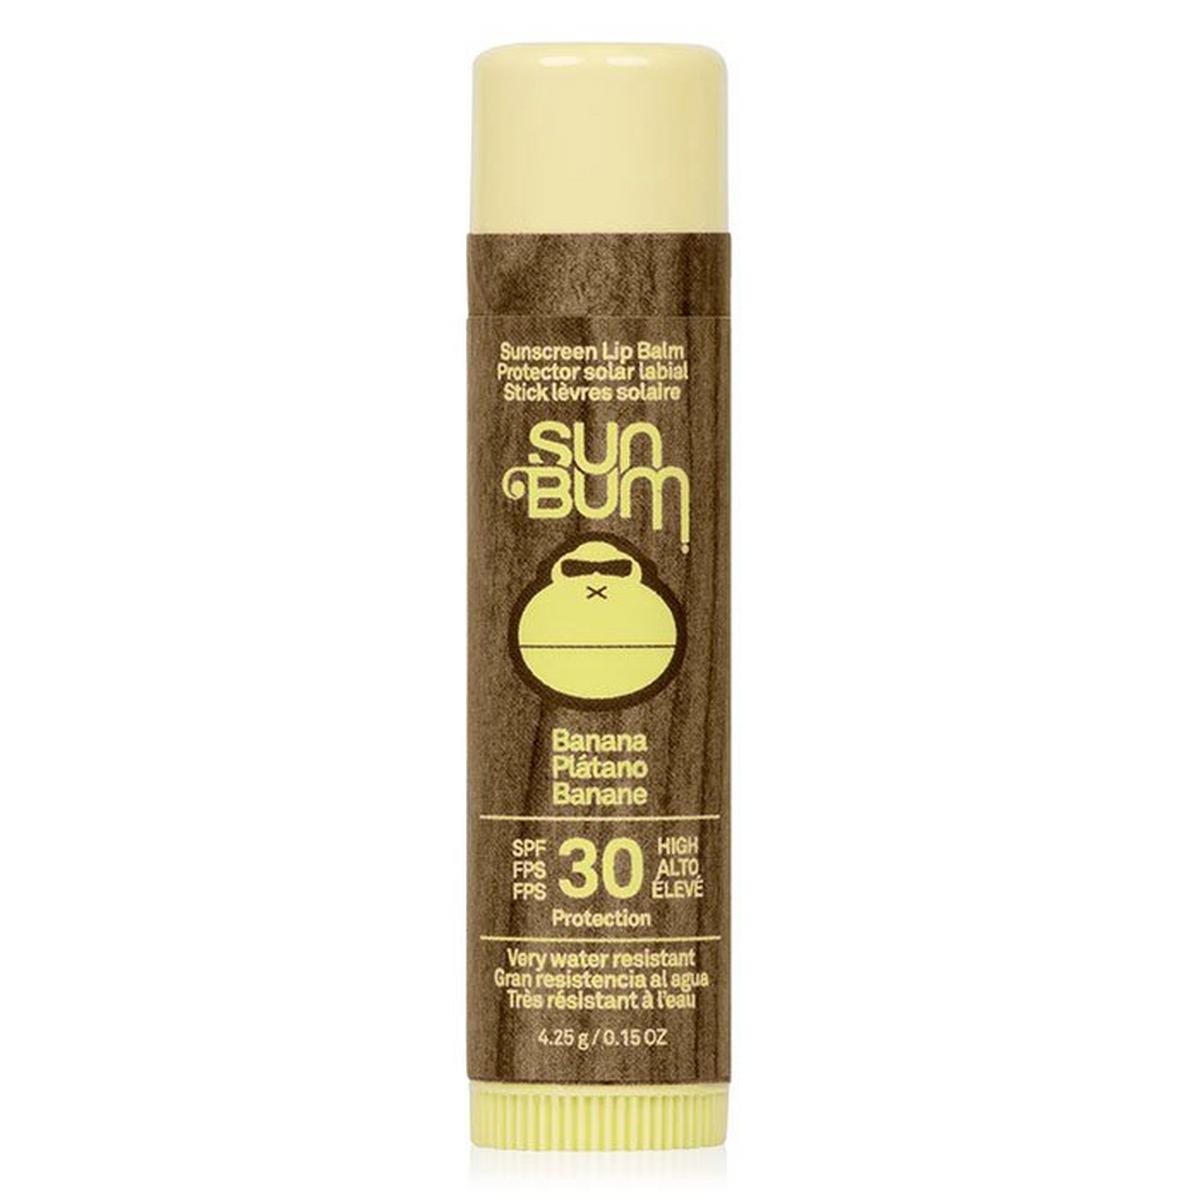 Banana Original SPF 30 Sunscreen Lip Balm